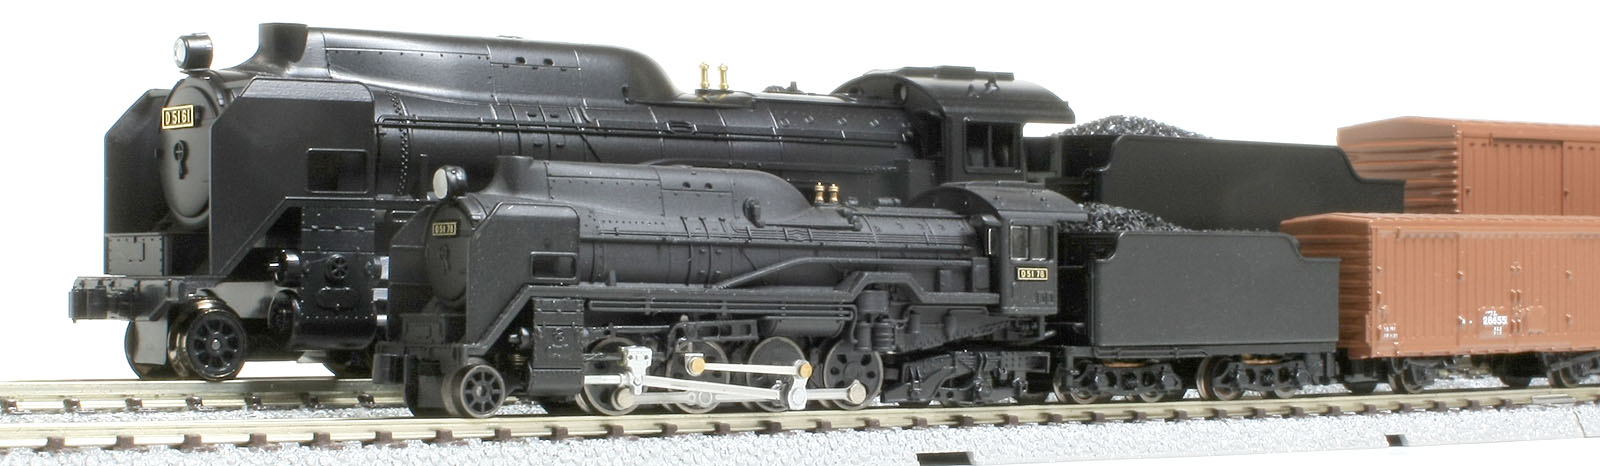 Nゲージ蒸気機関車-2009年のメモ